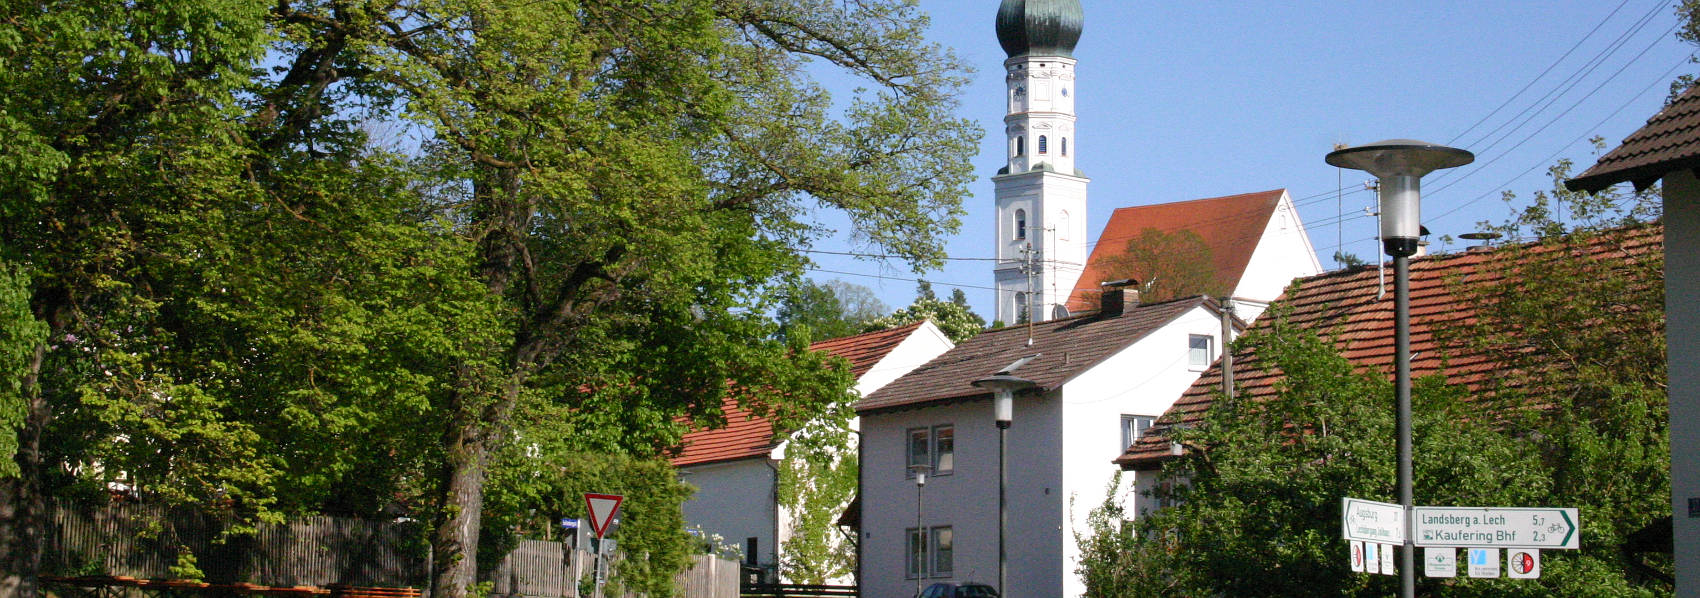 Landkreis Landsberg-Lech